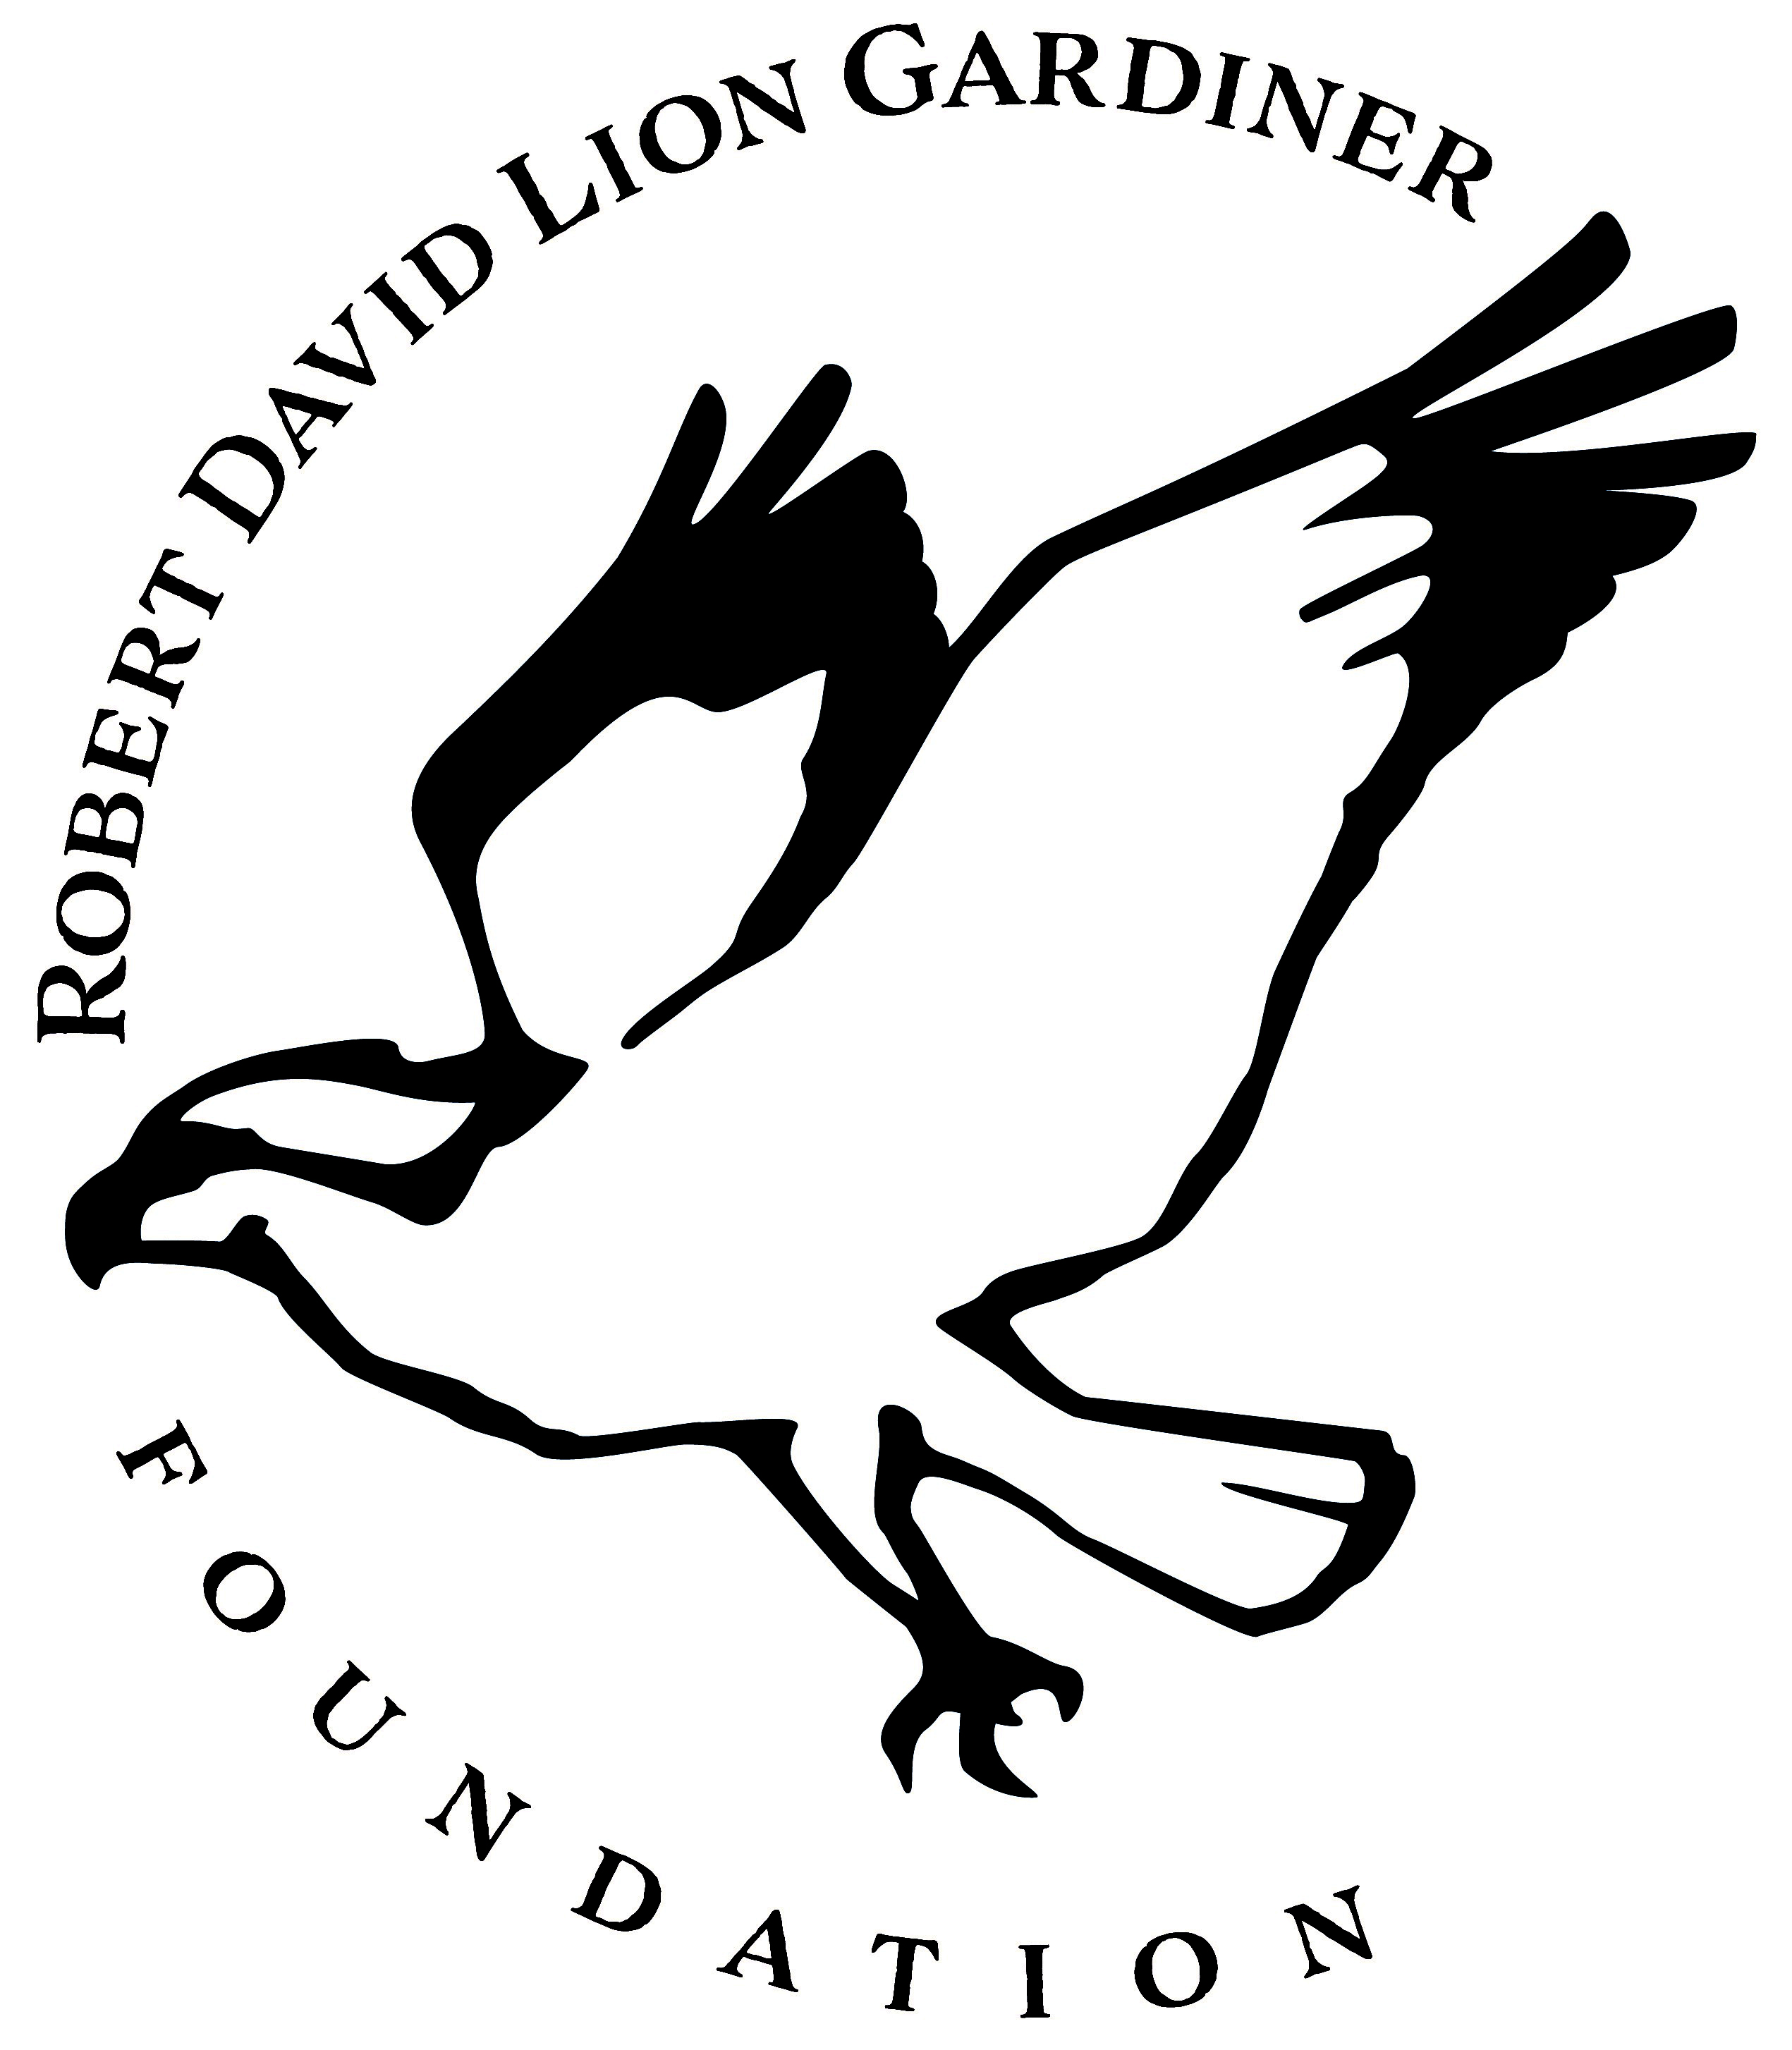 Robert DL Gardiner logo